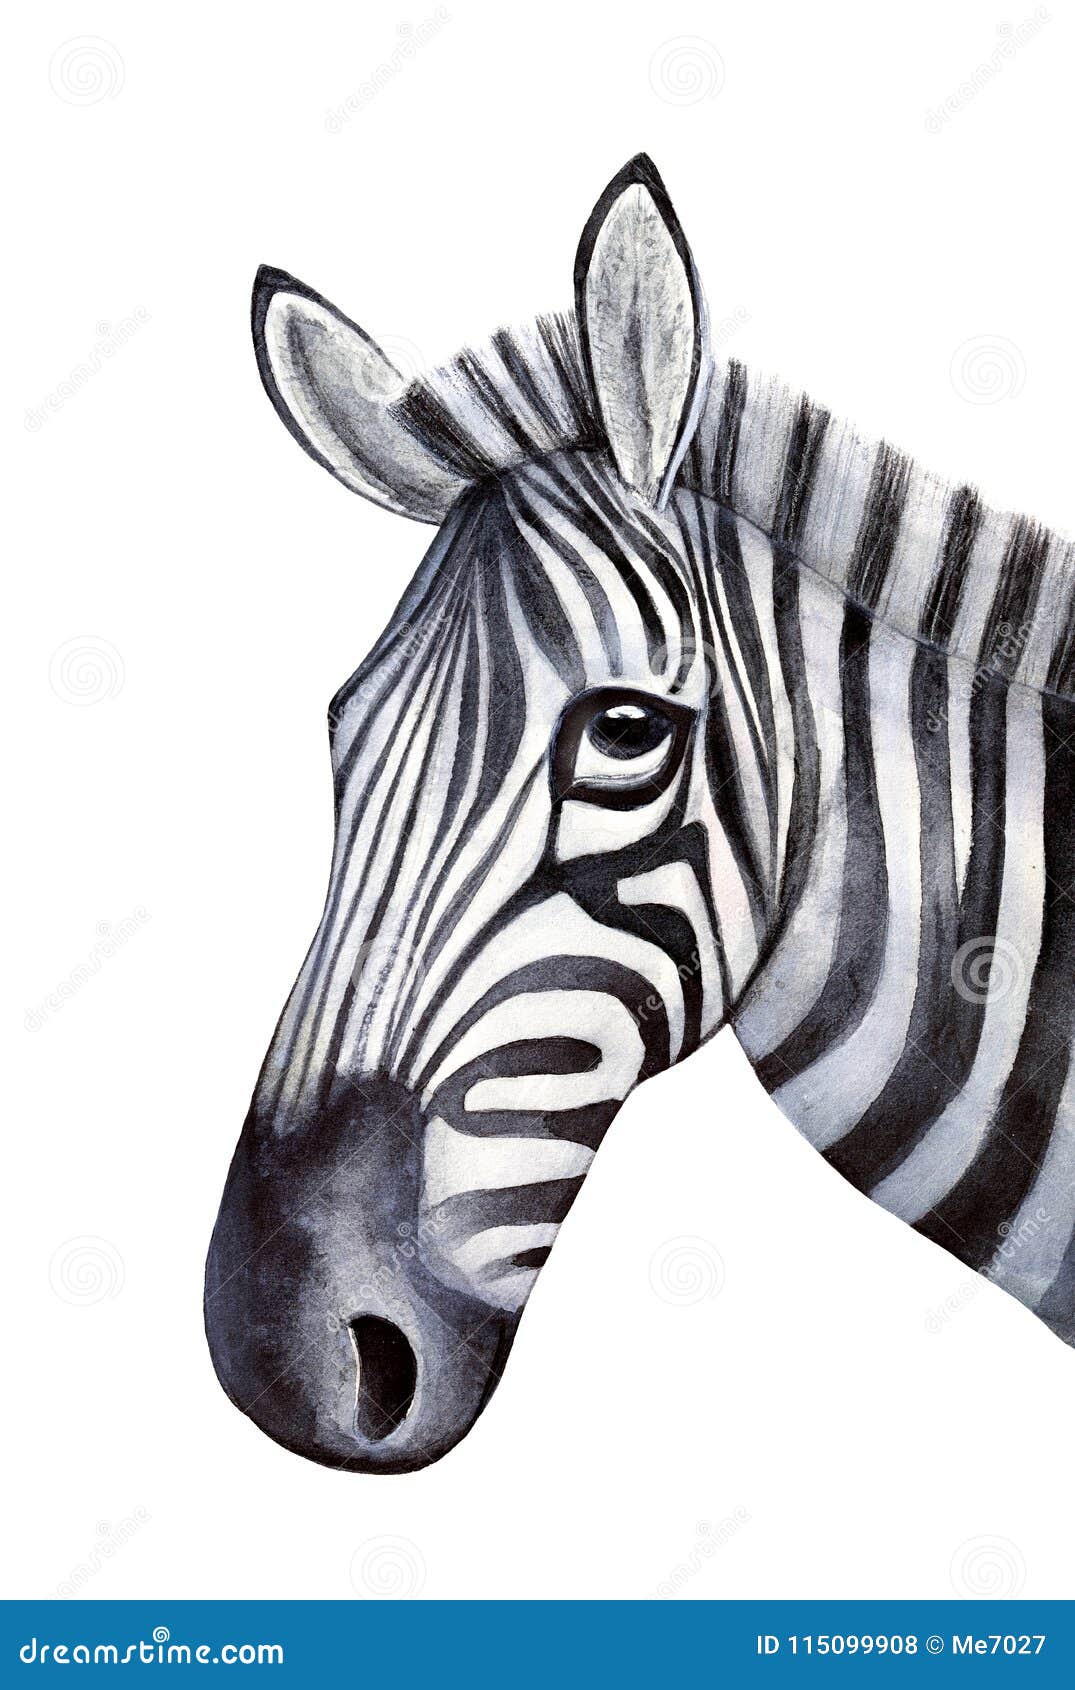 sketchy portrait of young zebra.